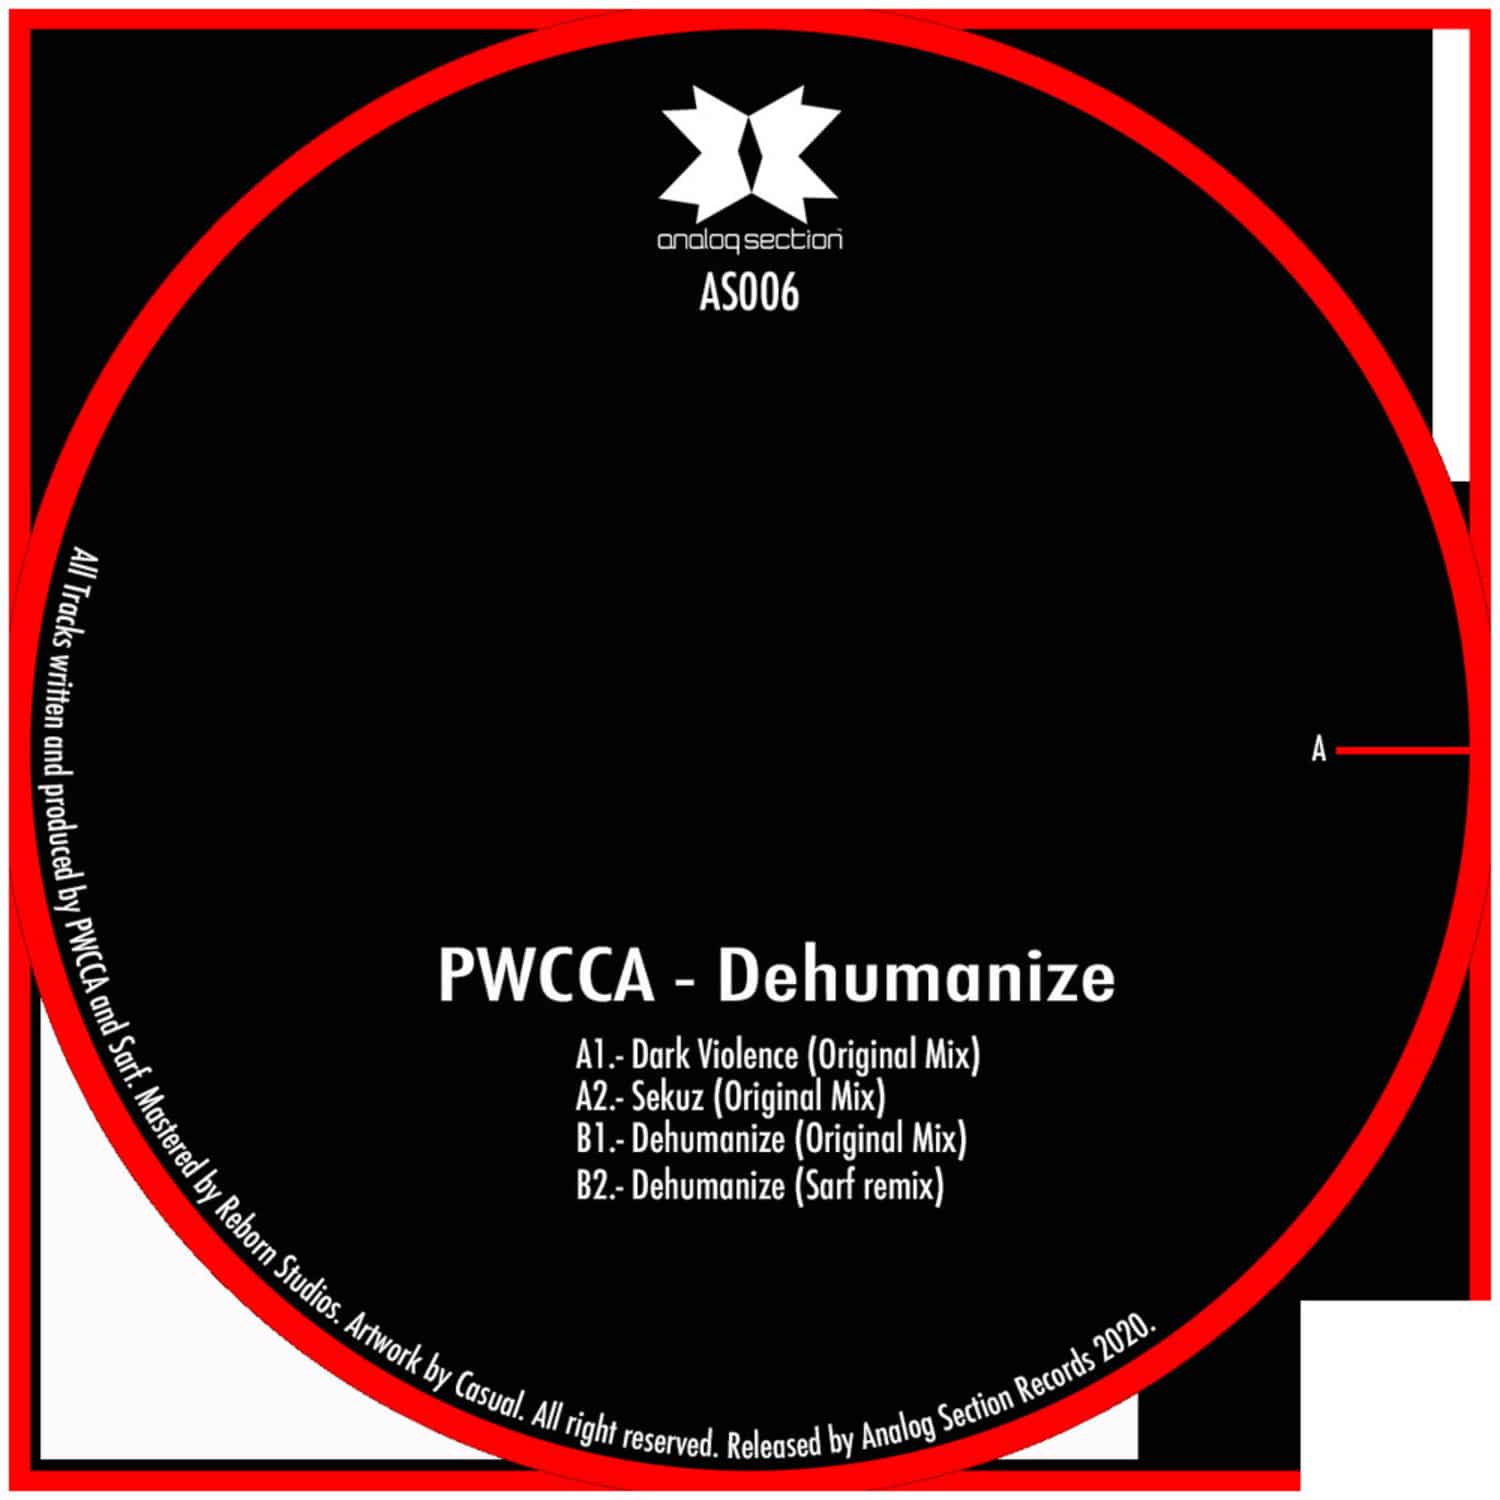 PWCCA - DEHUMANIZE EP